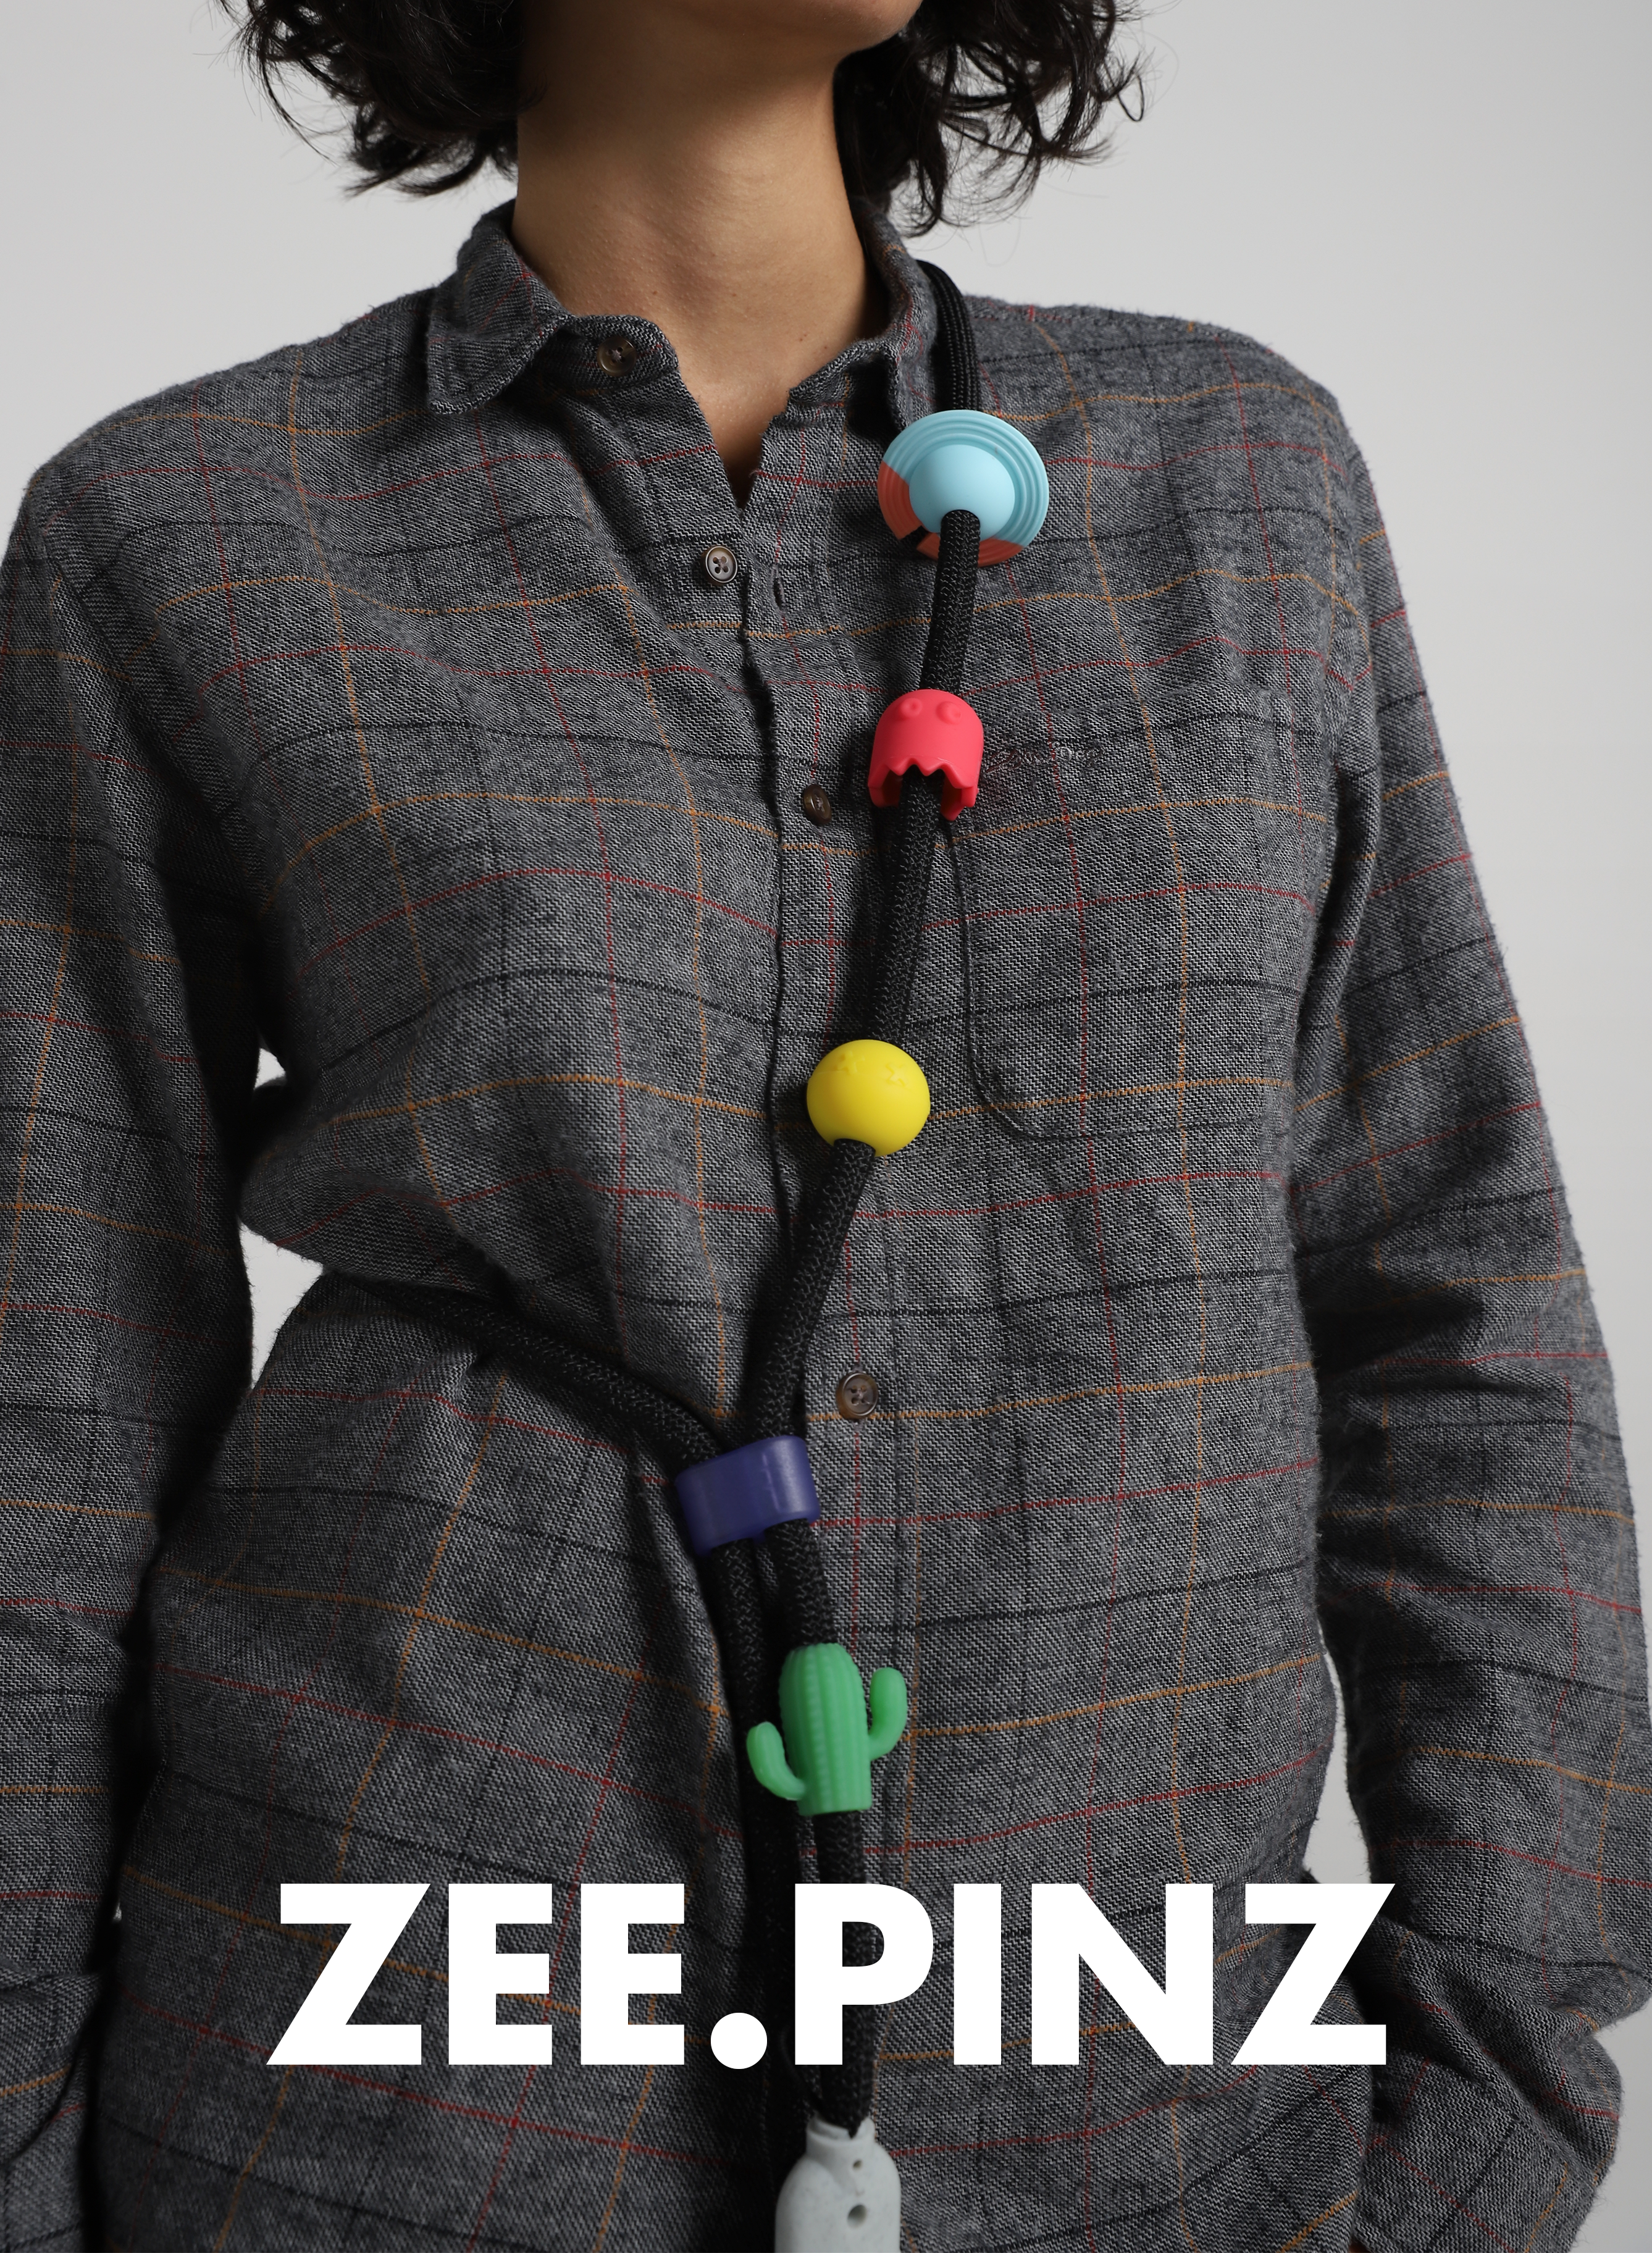 Colección Zee.pinz